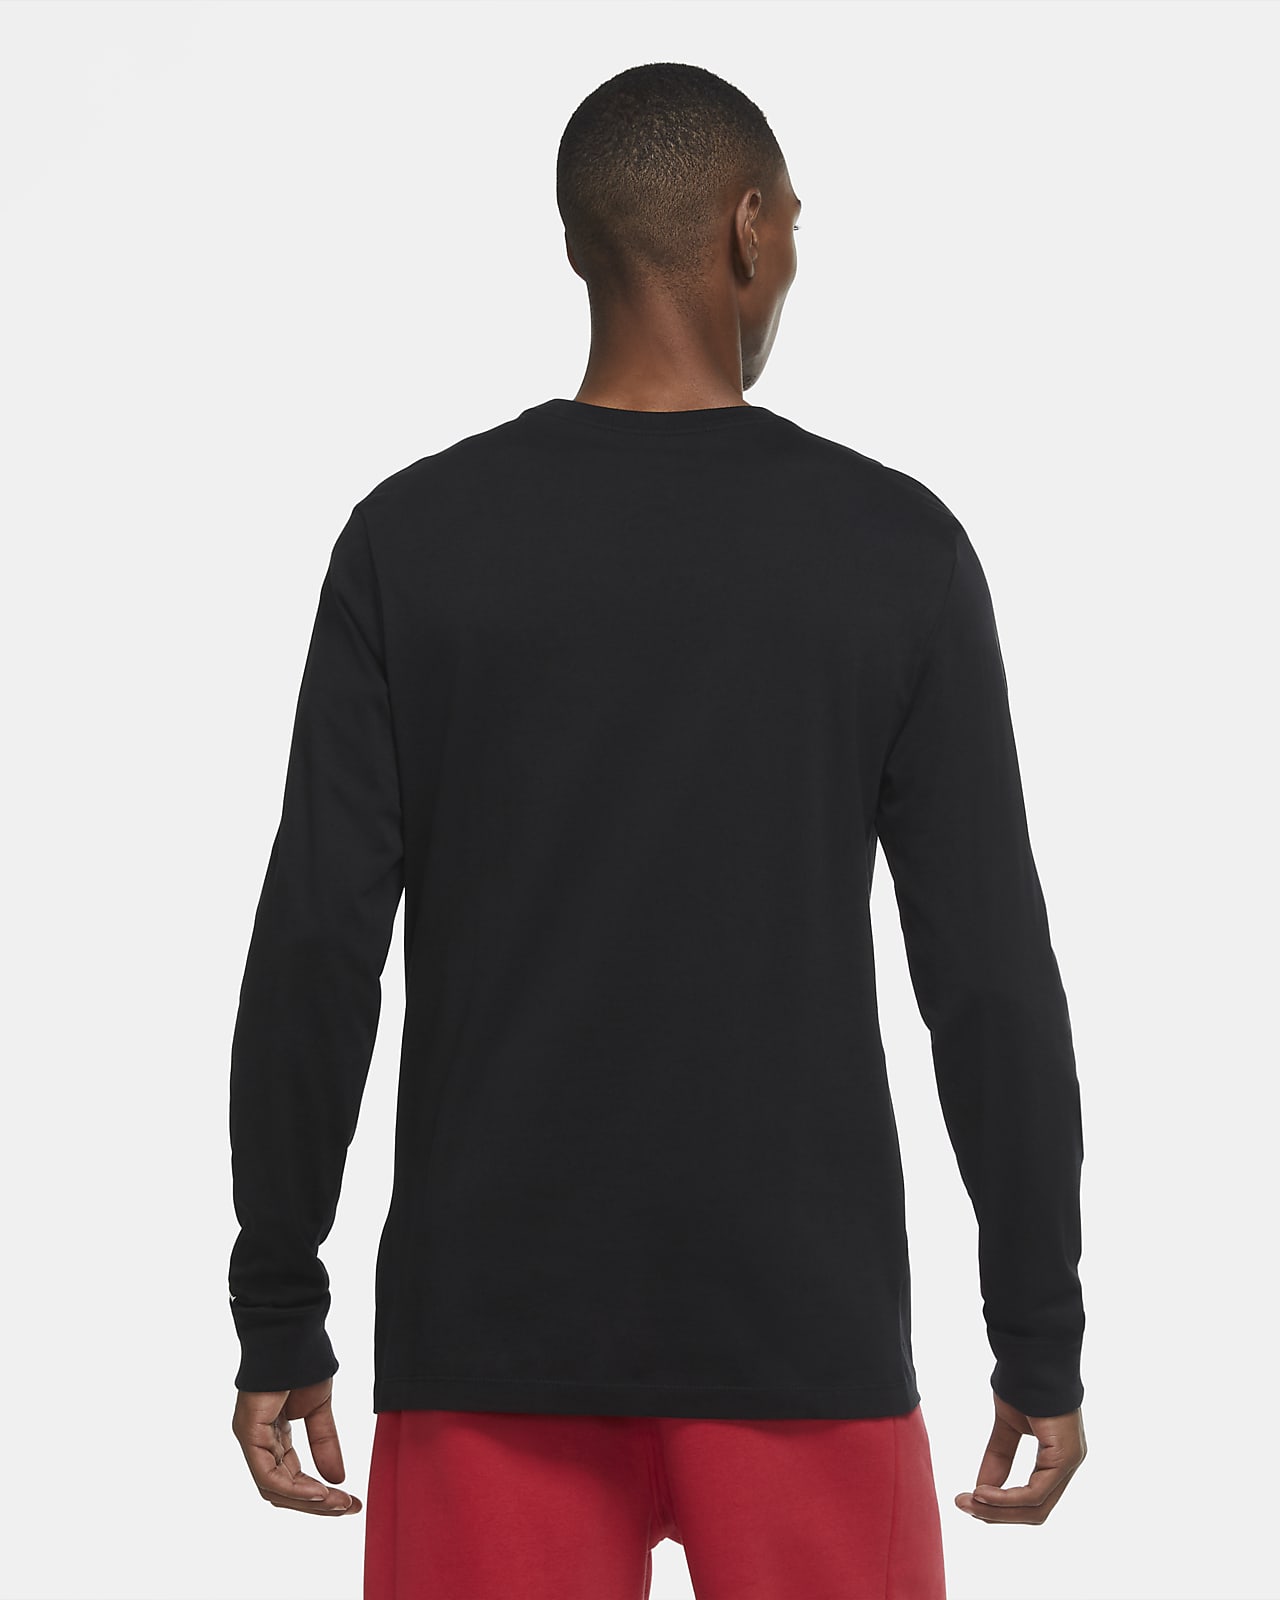 Nike公式 ジョーダン ジャンプマン チムニー メンズ ロングスリーブ Tシャツ オンラインストア 通販サイト